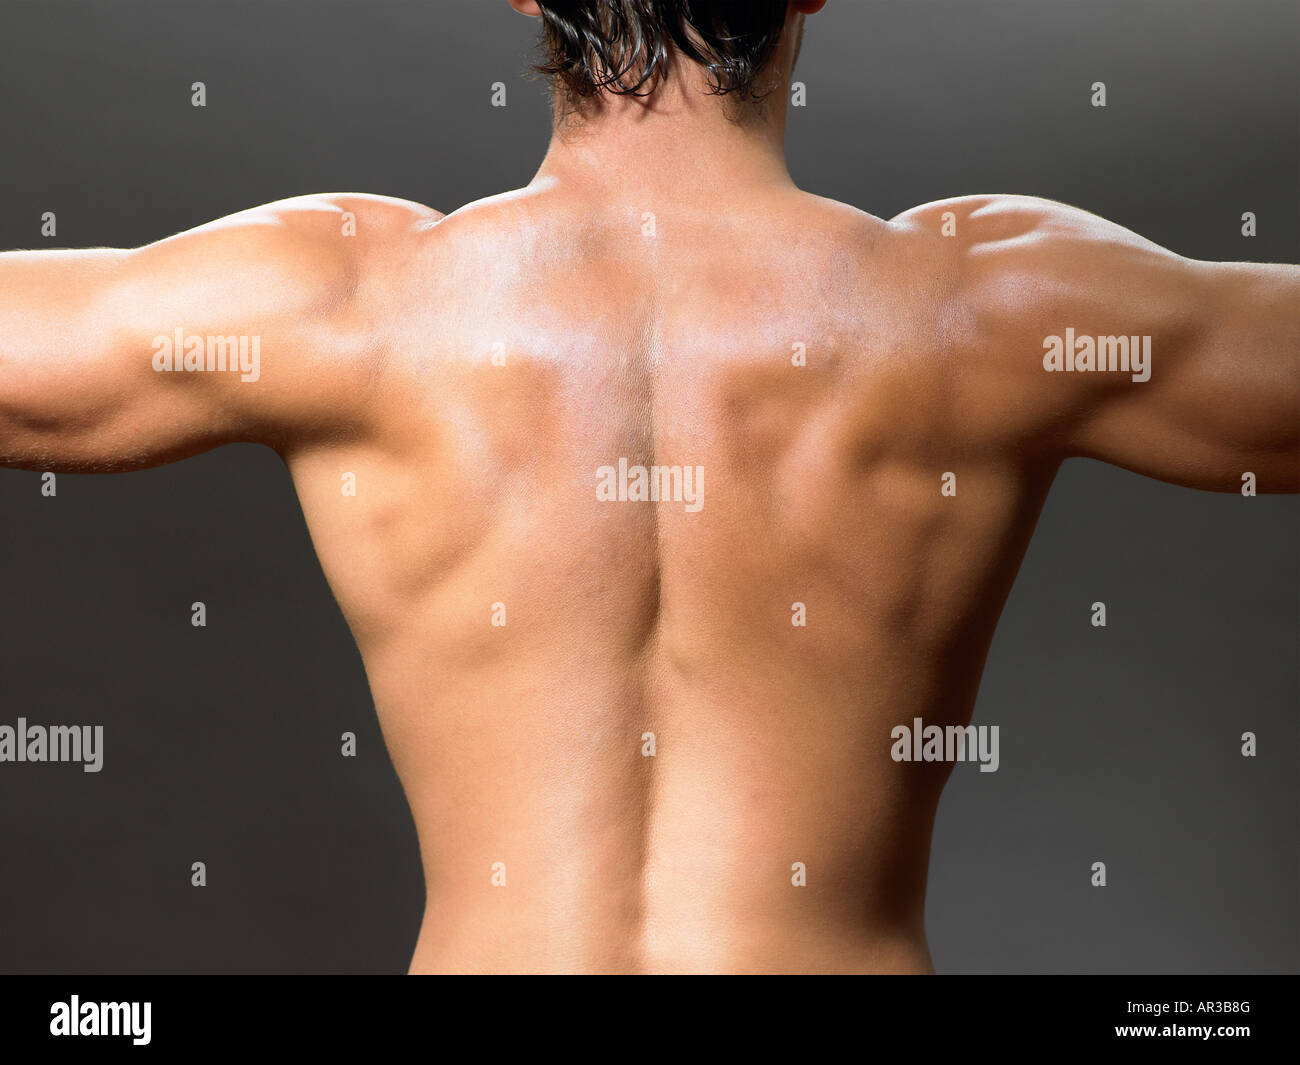 Image of Backside human pic back image-WN646273-Picxy